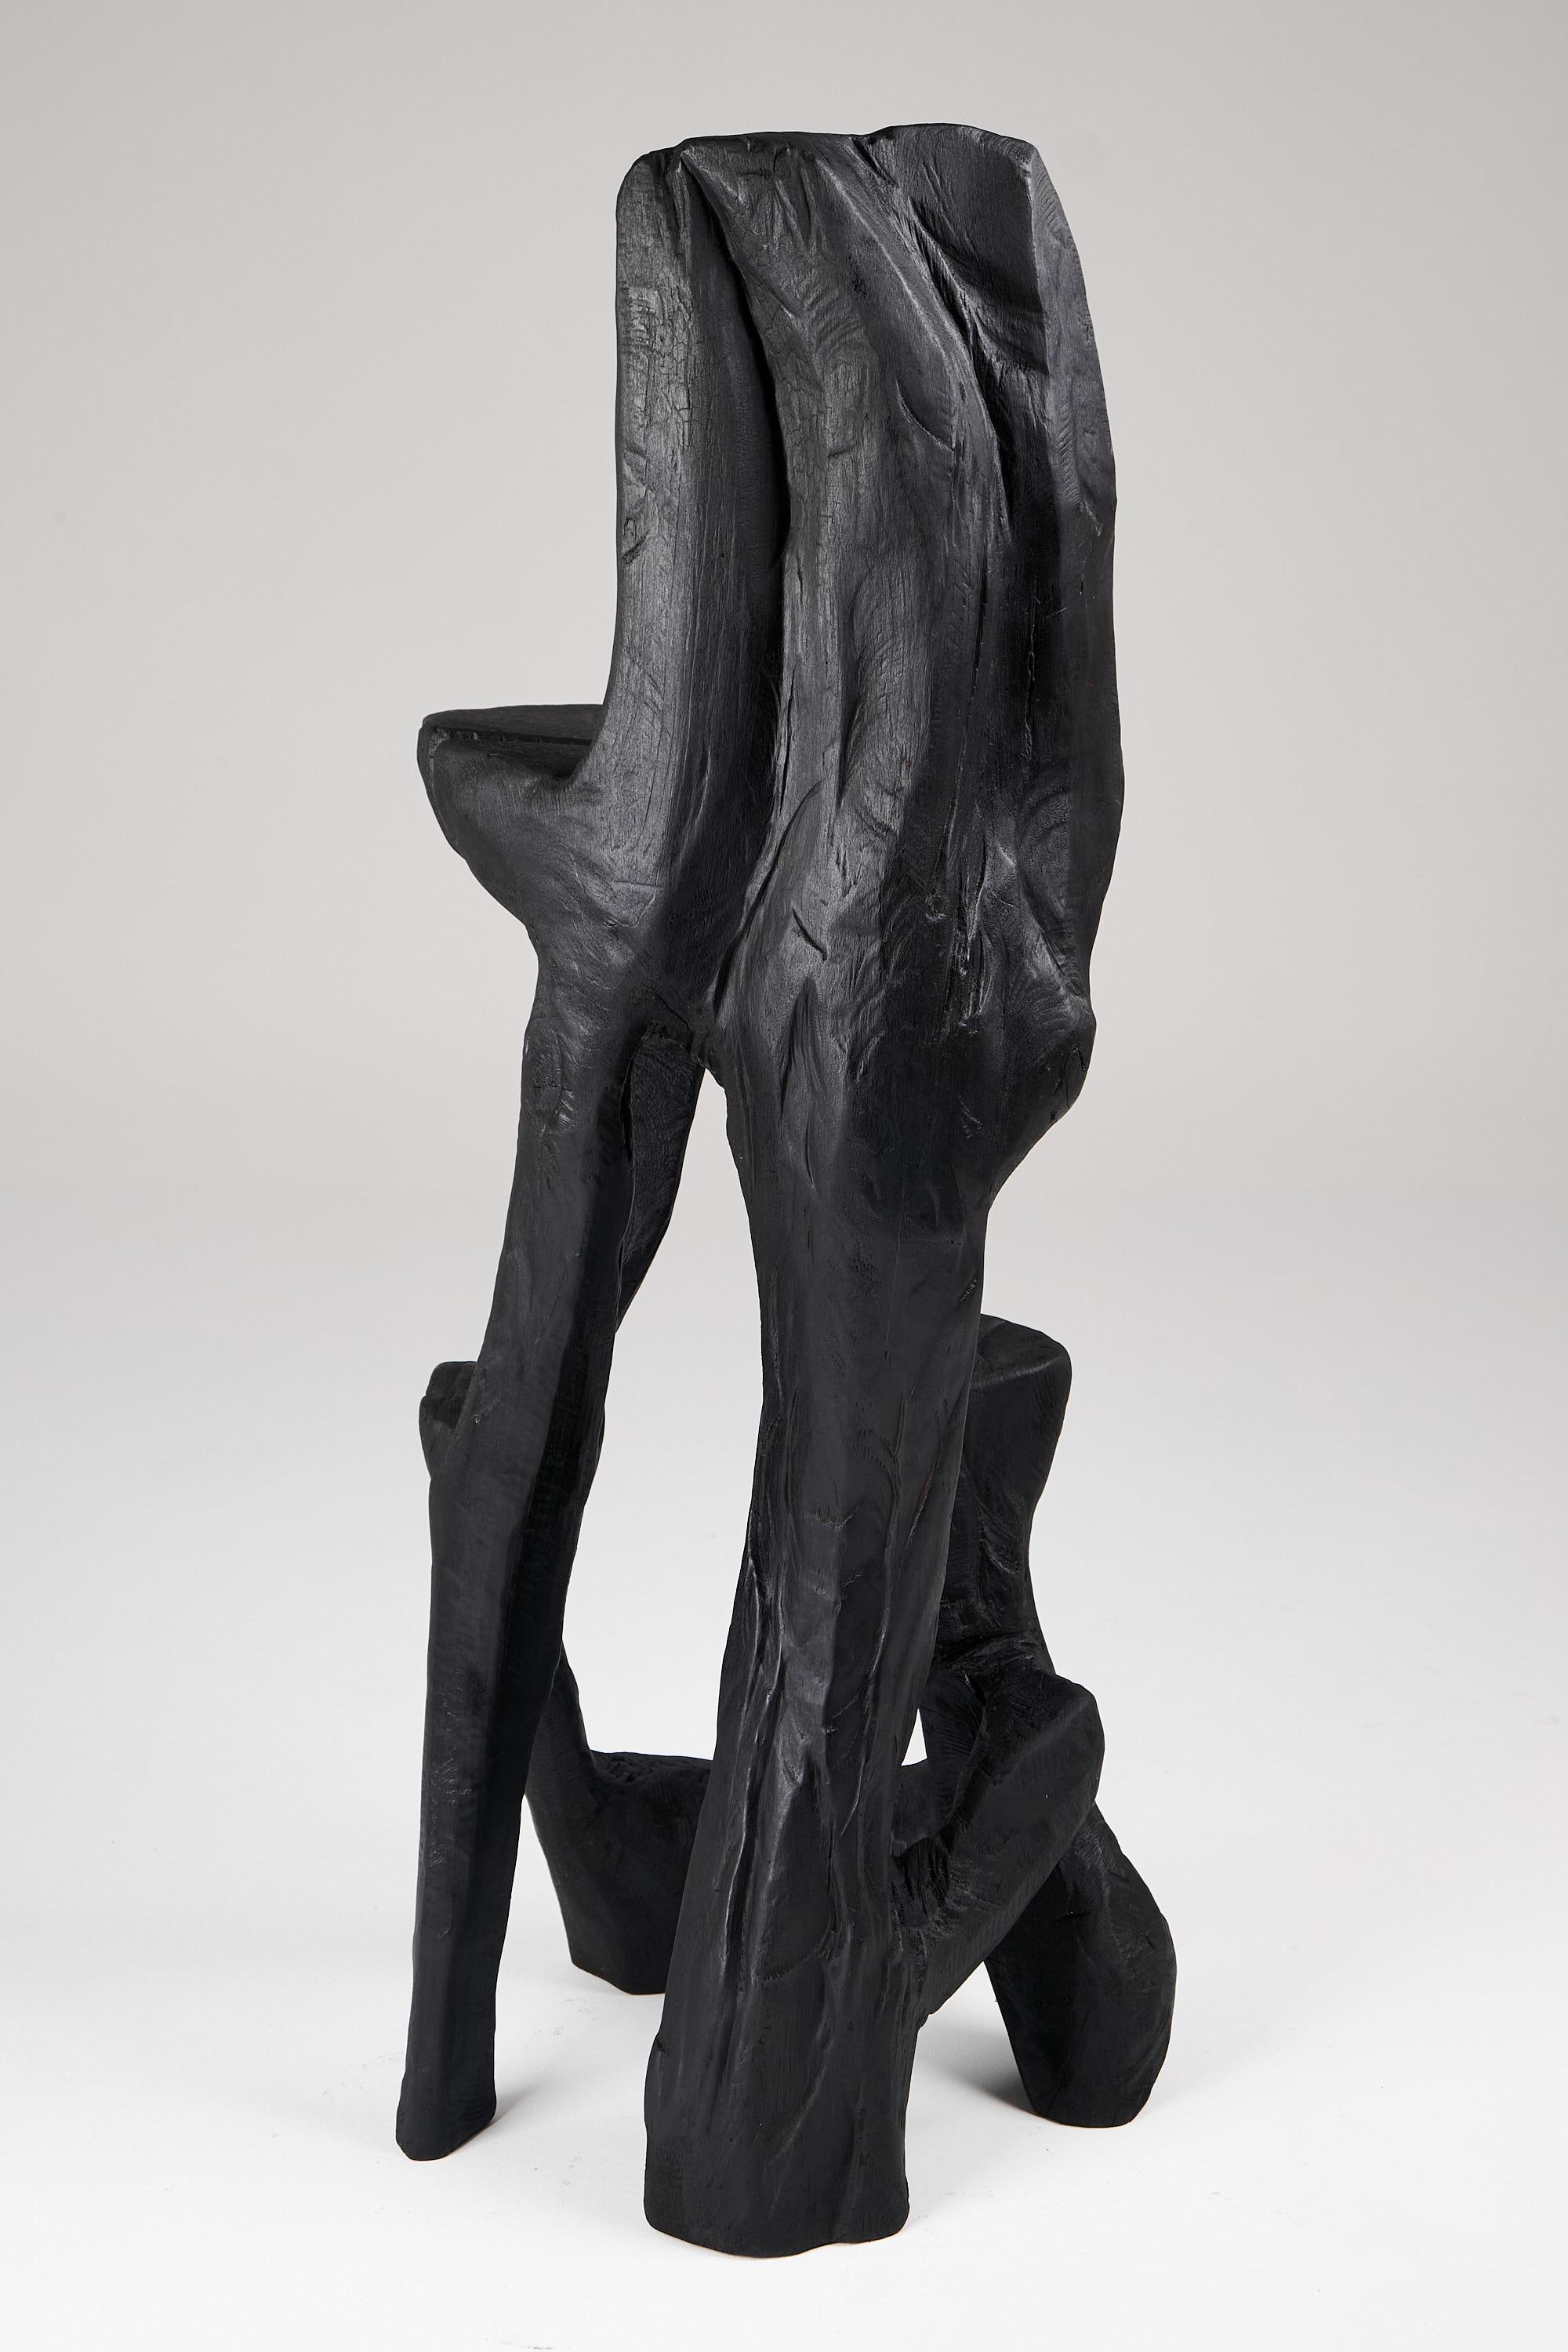 Makha, Solid Wood Sculptural Bar Chair, Original Contemporary Design, Logniture For Sale 9